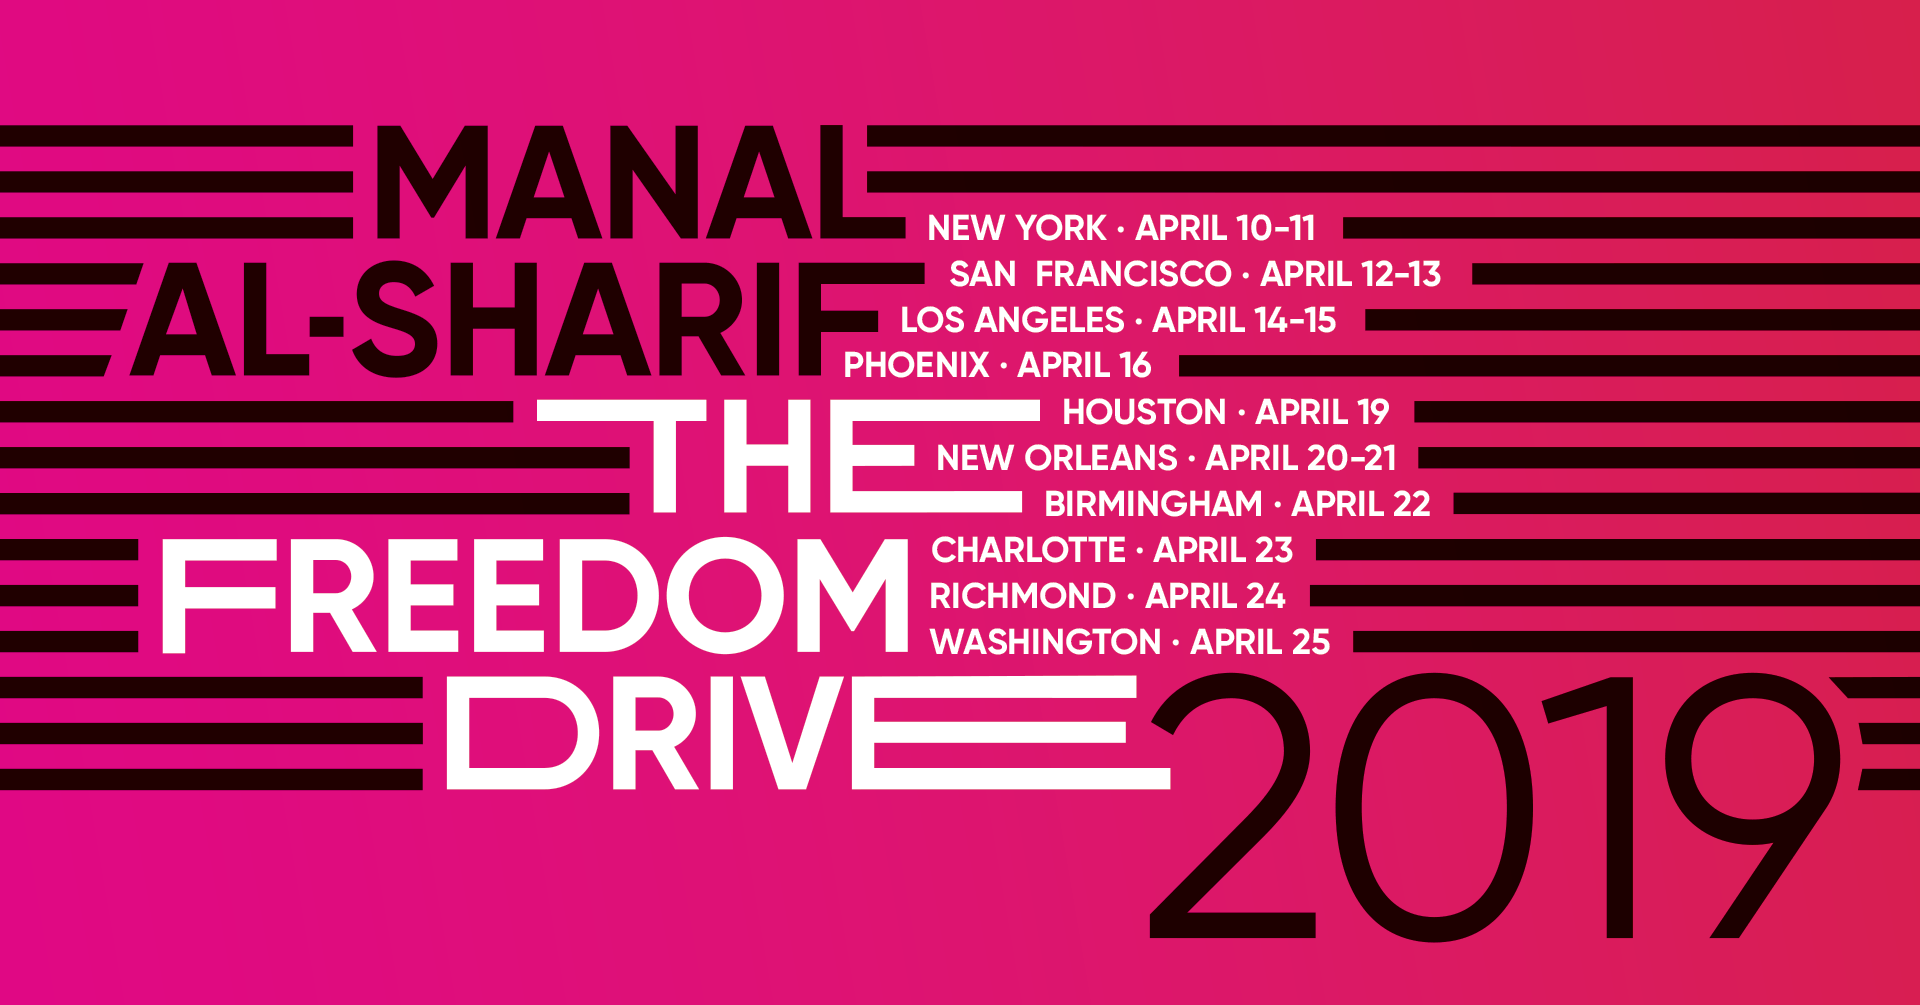 Manal al-Sharif’s “Freedom Drive” #IDrive4Freedom